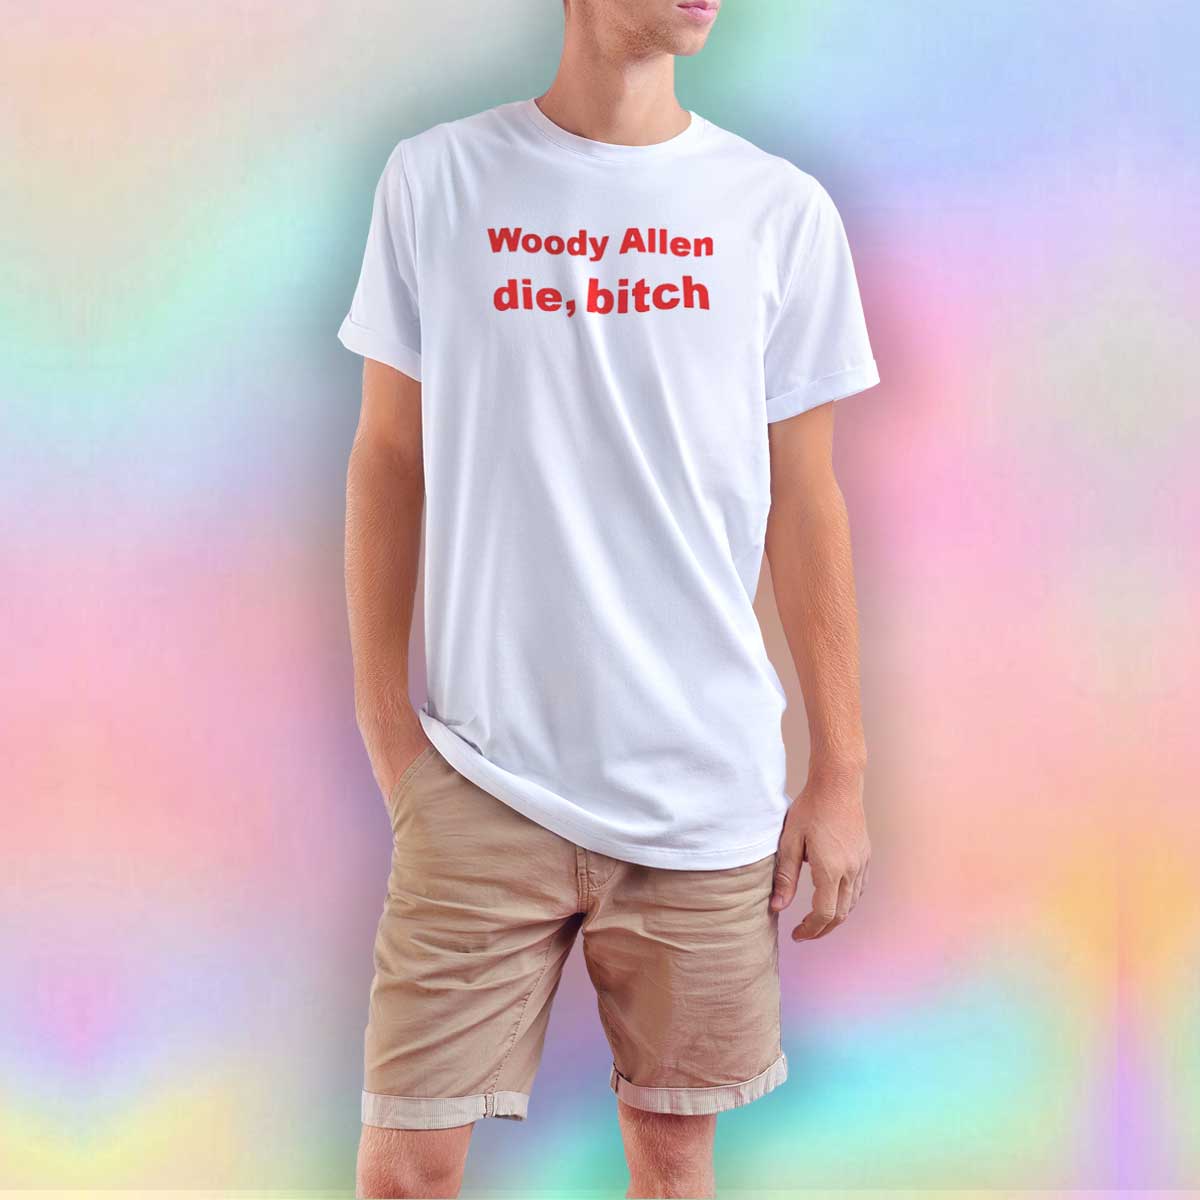 Best Selling Woody Allen Bitch Graphic T-Shirt Cloudteesdesign.com